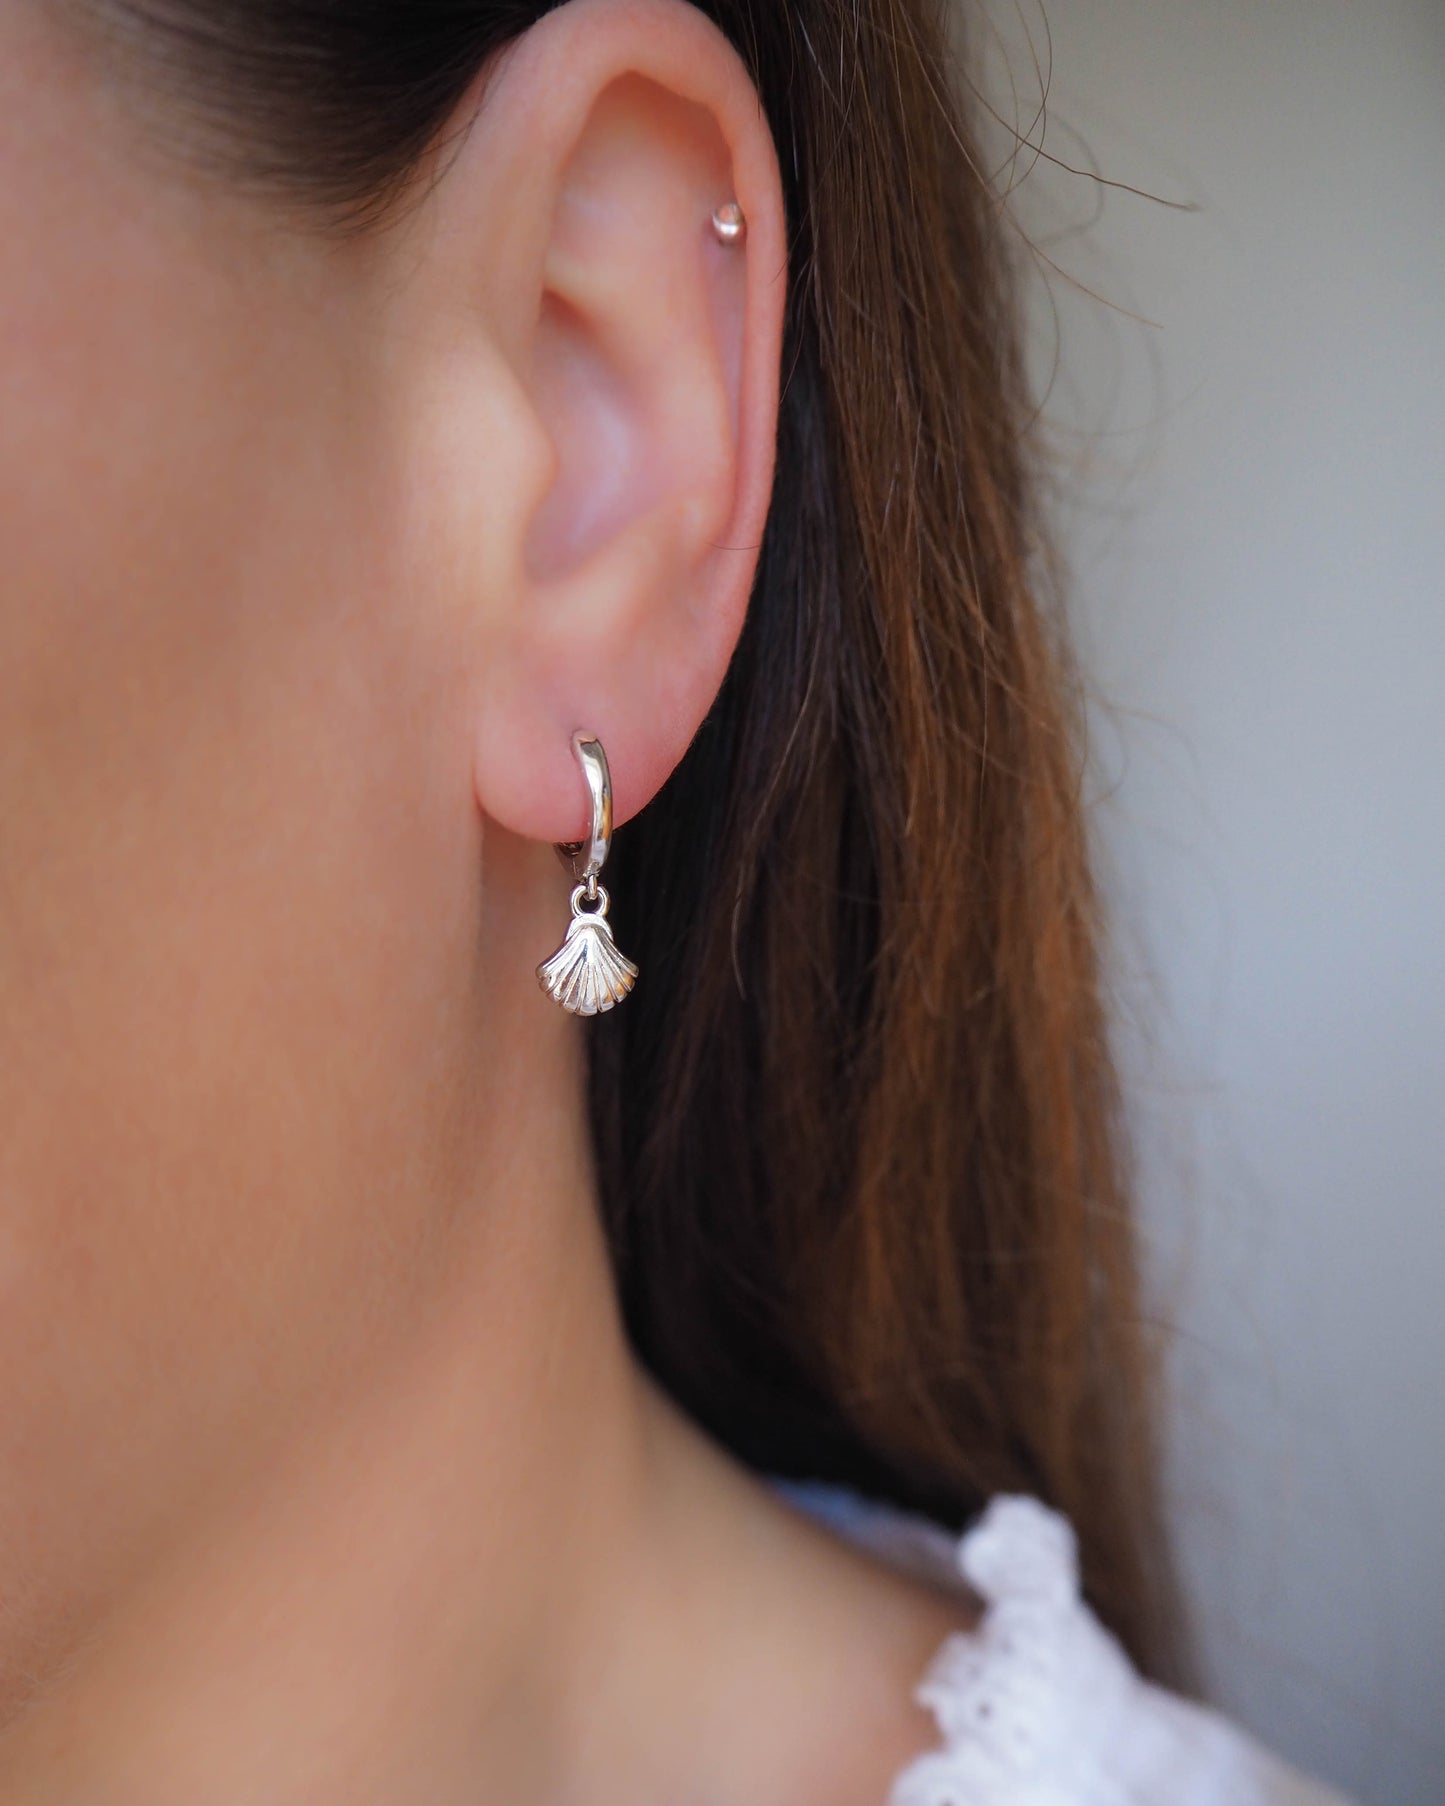 Model wearing Sterling Silver Earring Hoops with Shell Pendants - Silver Shell Earrings - Coastal Chic Jewelry, SeabyLou